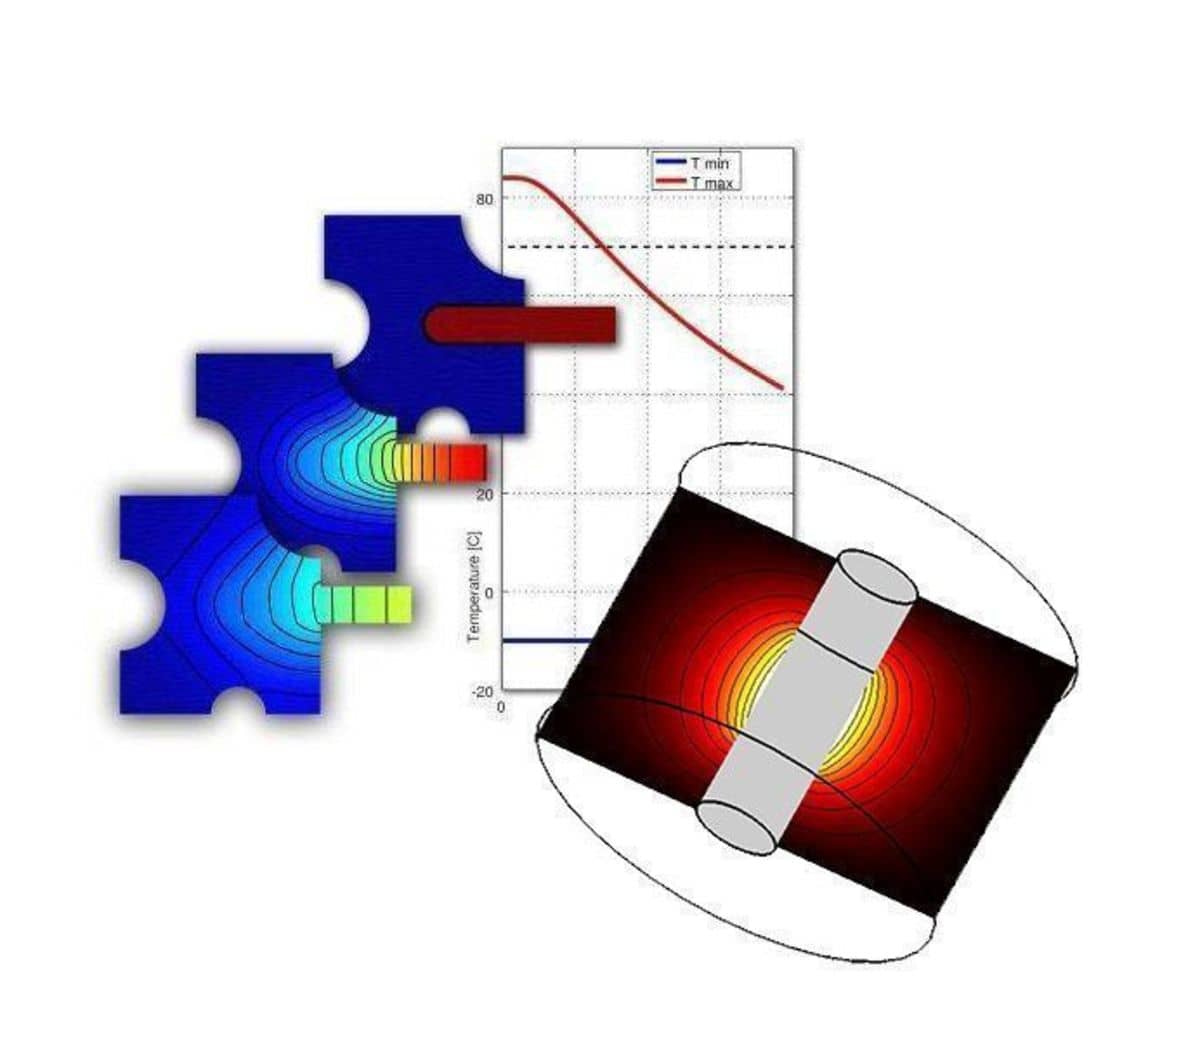 Model Showcase Image - Heat and Mass Transfer Simulation